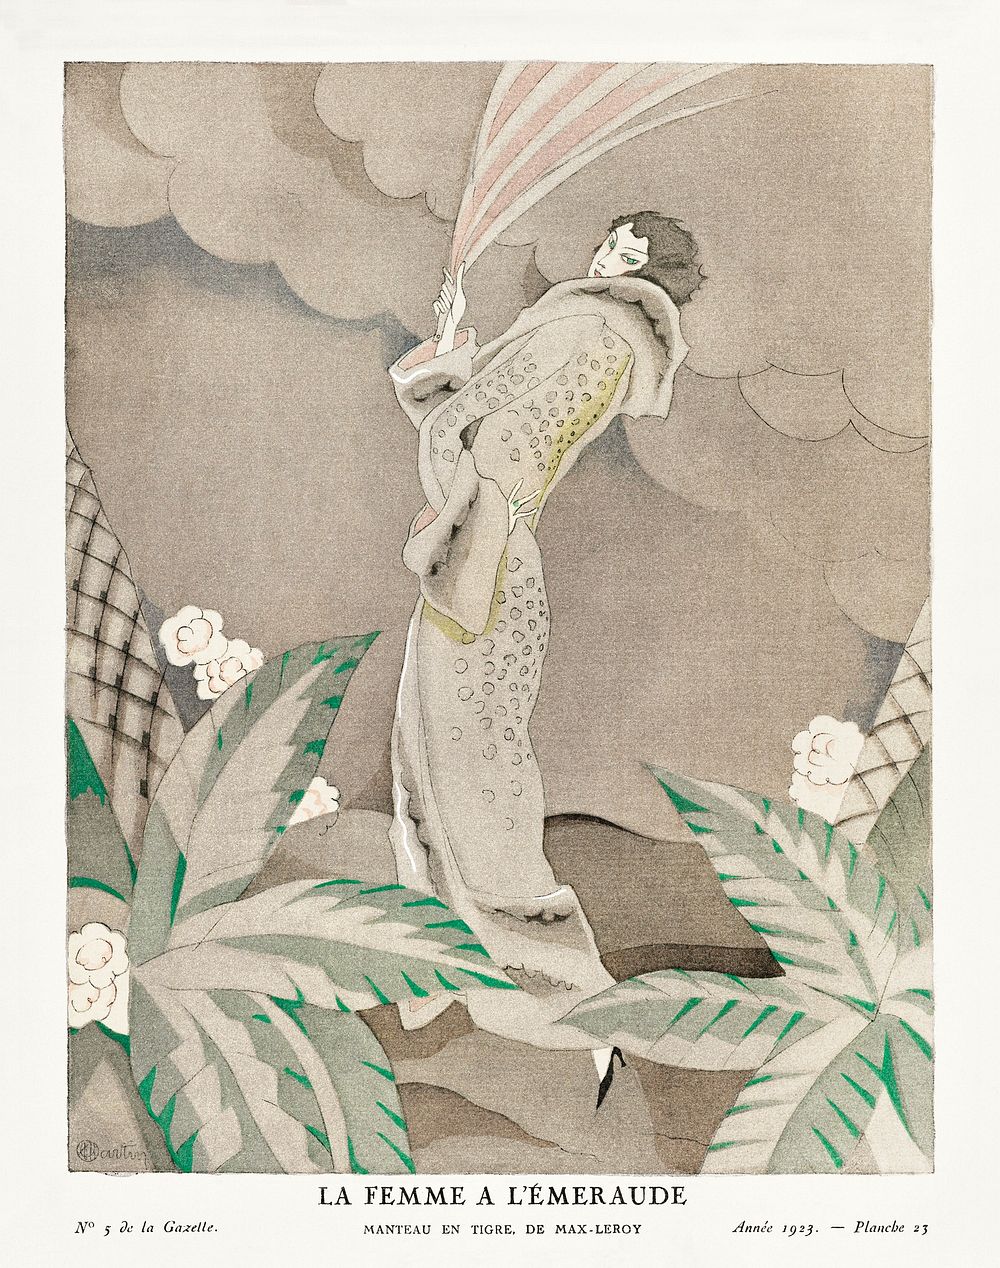 La femme a l'&eacute;meraude, Manteau en tigre, de Max-Leroy (1923)fashion plate in high resolution by Charles Martin…